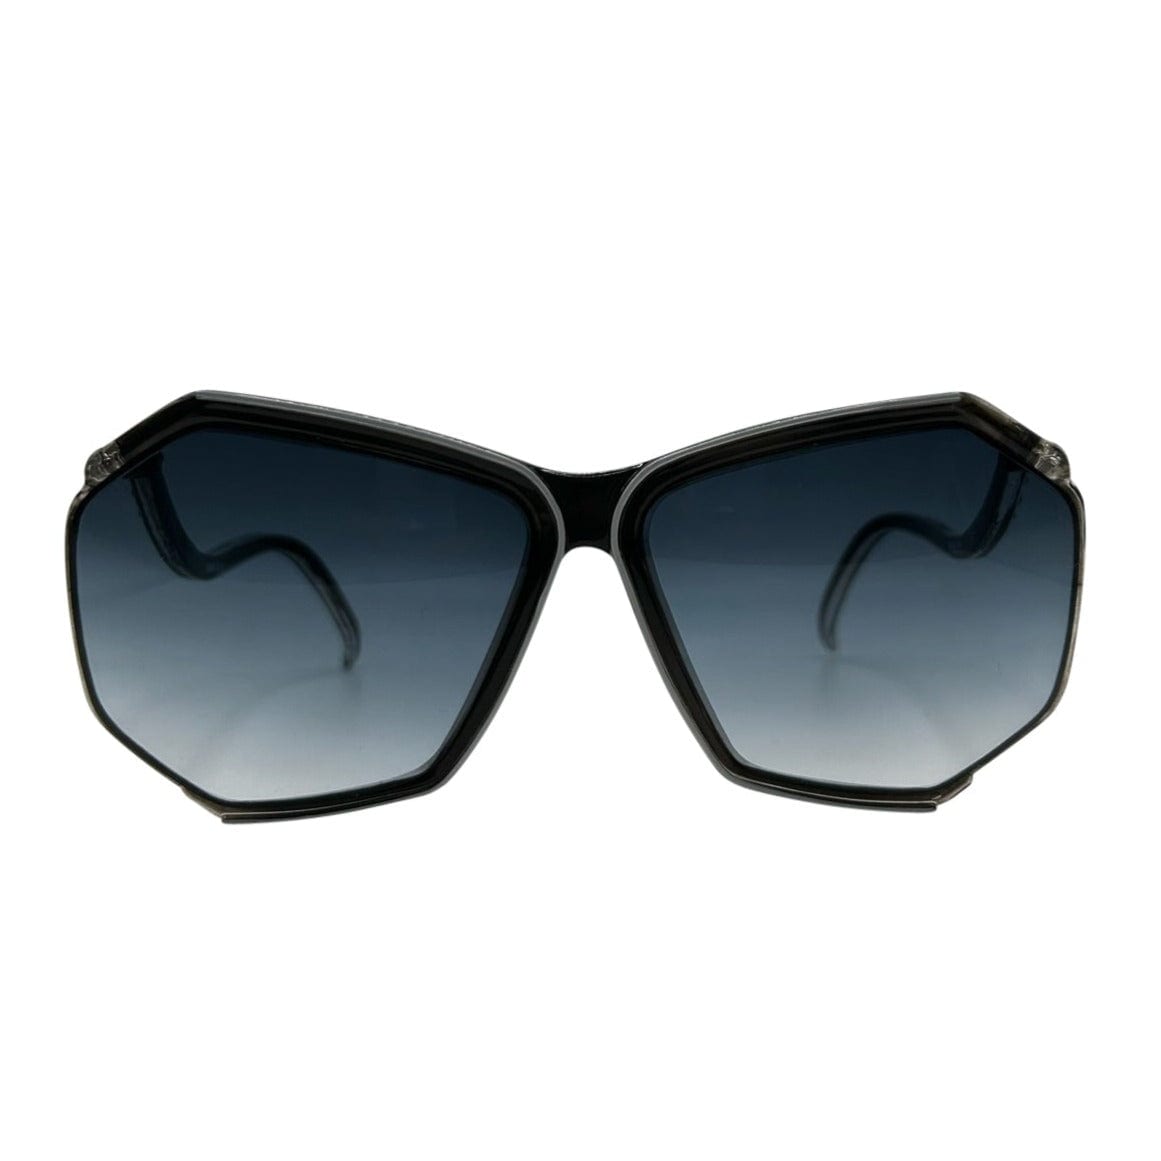 BOOGIE Black 80s Sunglasses